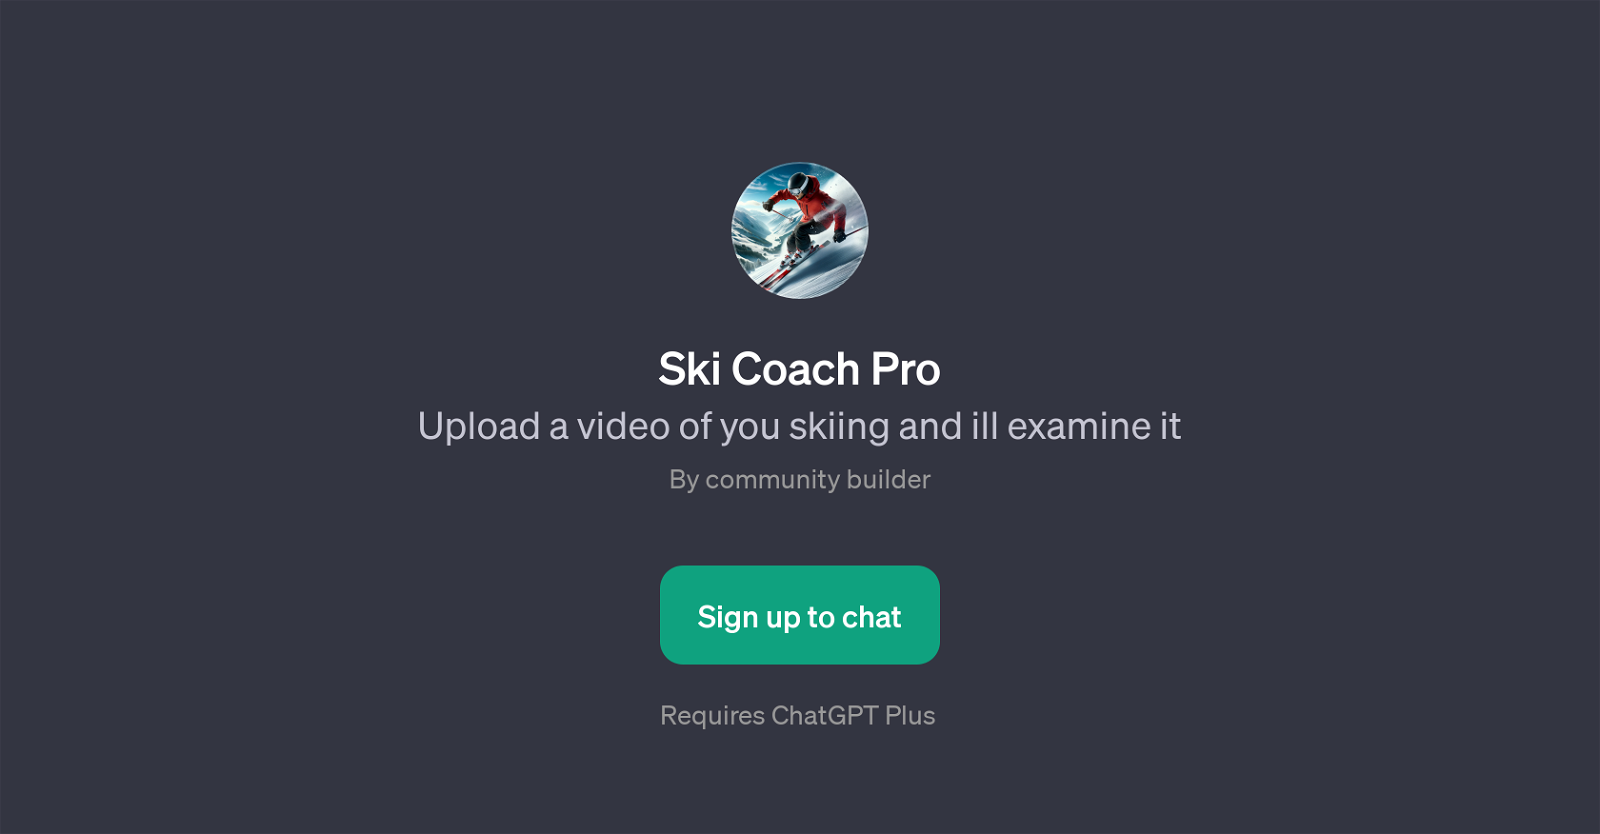 Ski Coach Pro website